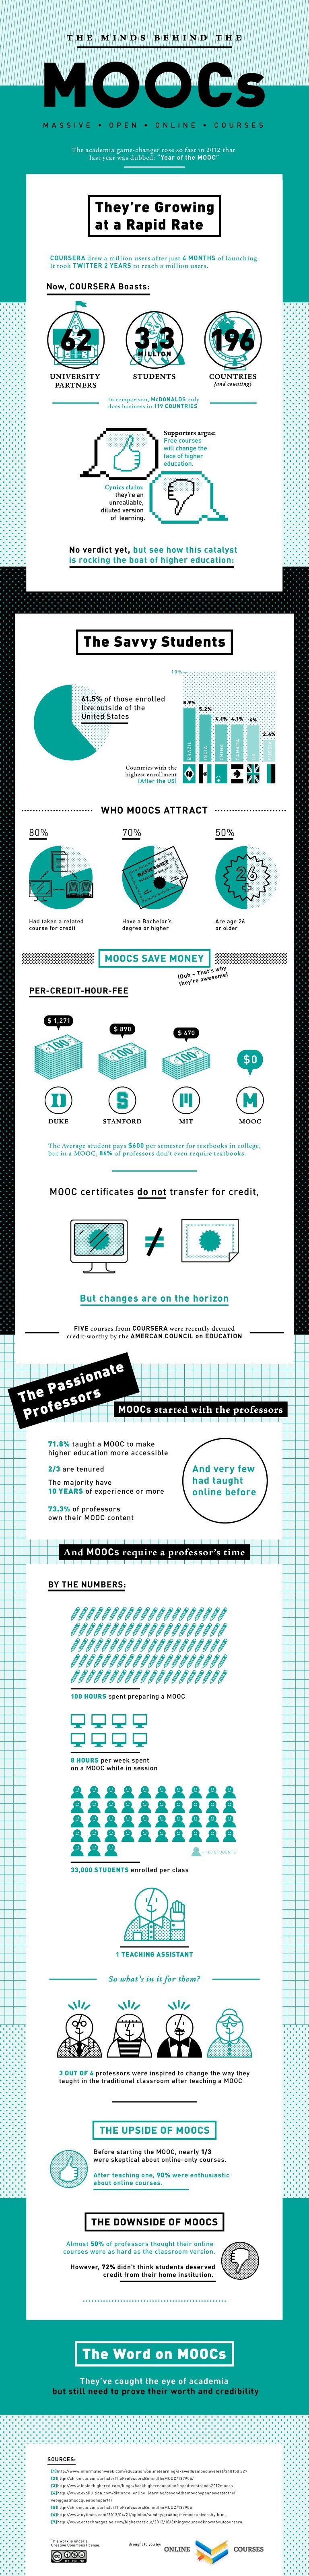 The Minds Behind The MOOCs thumbnail